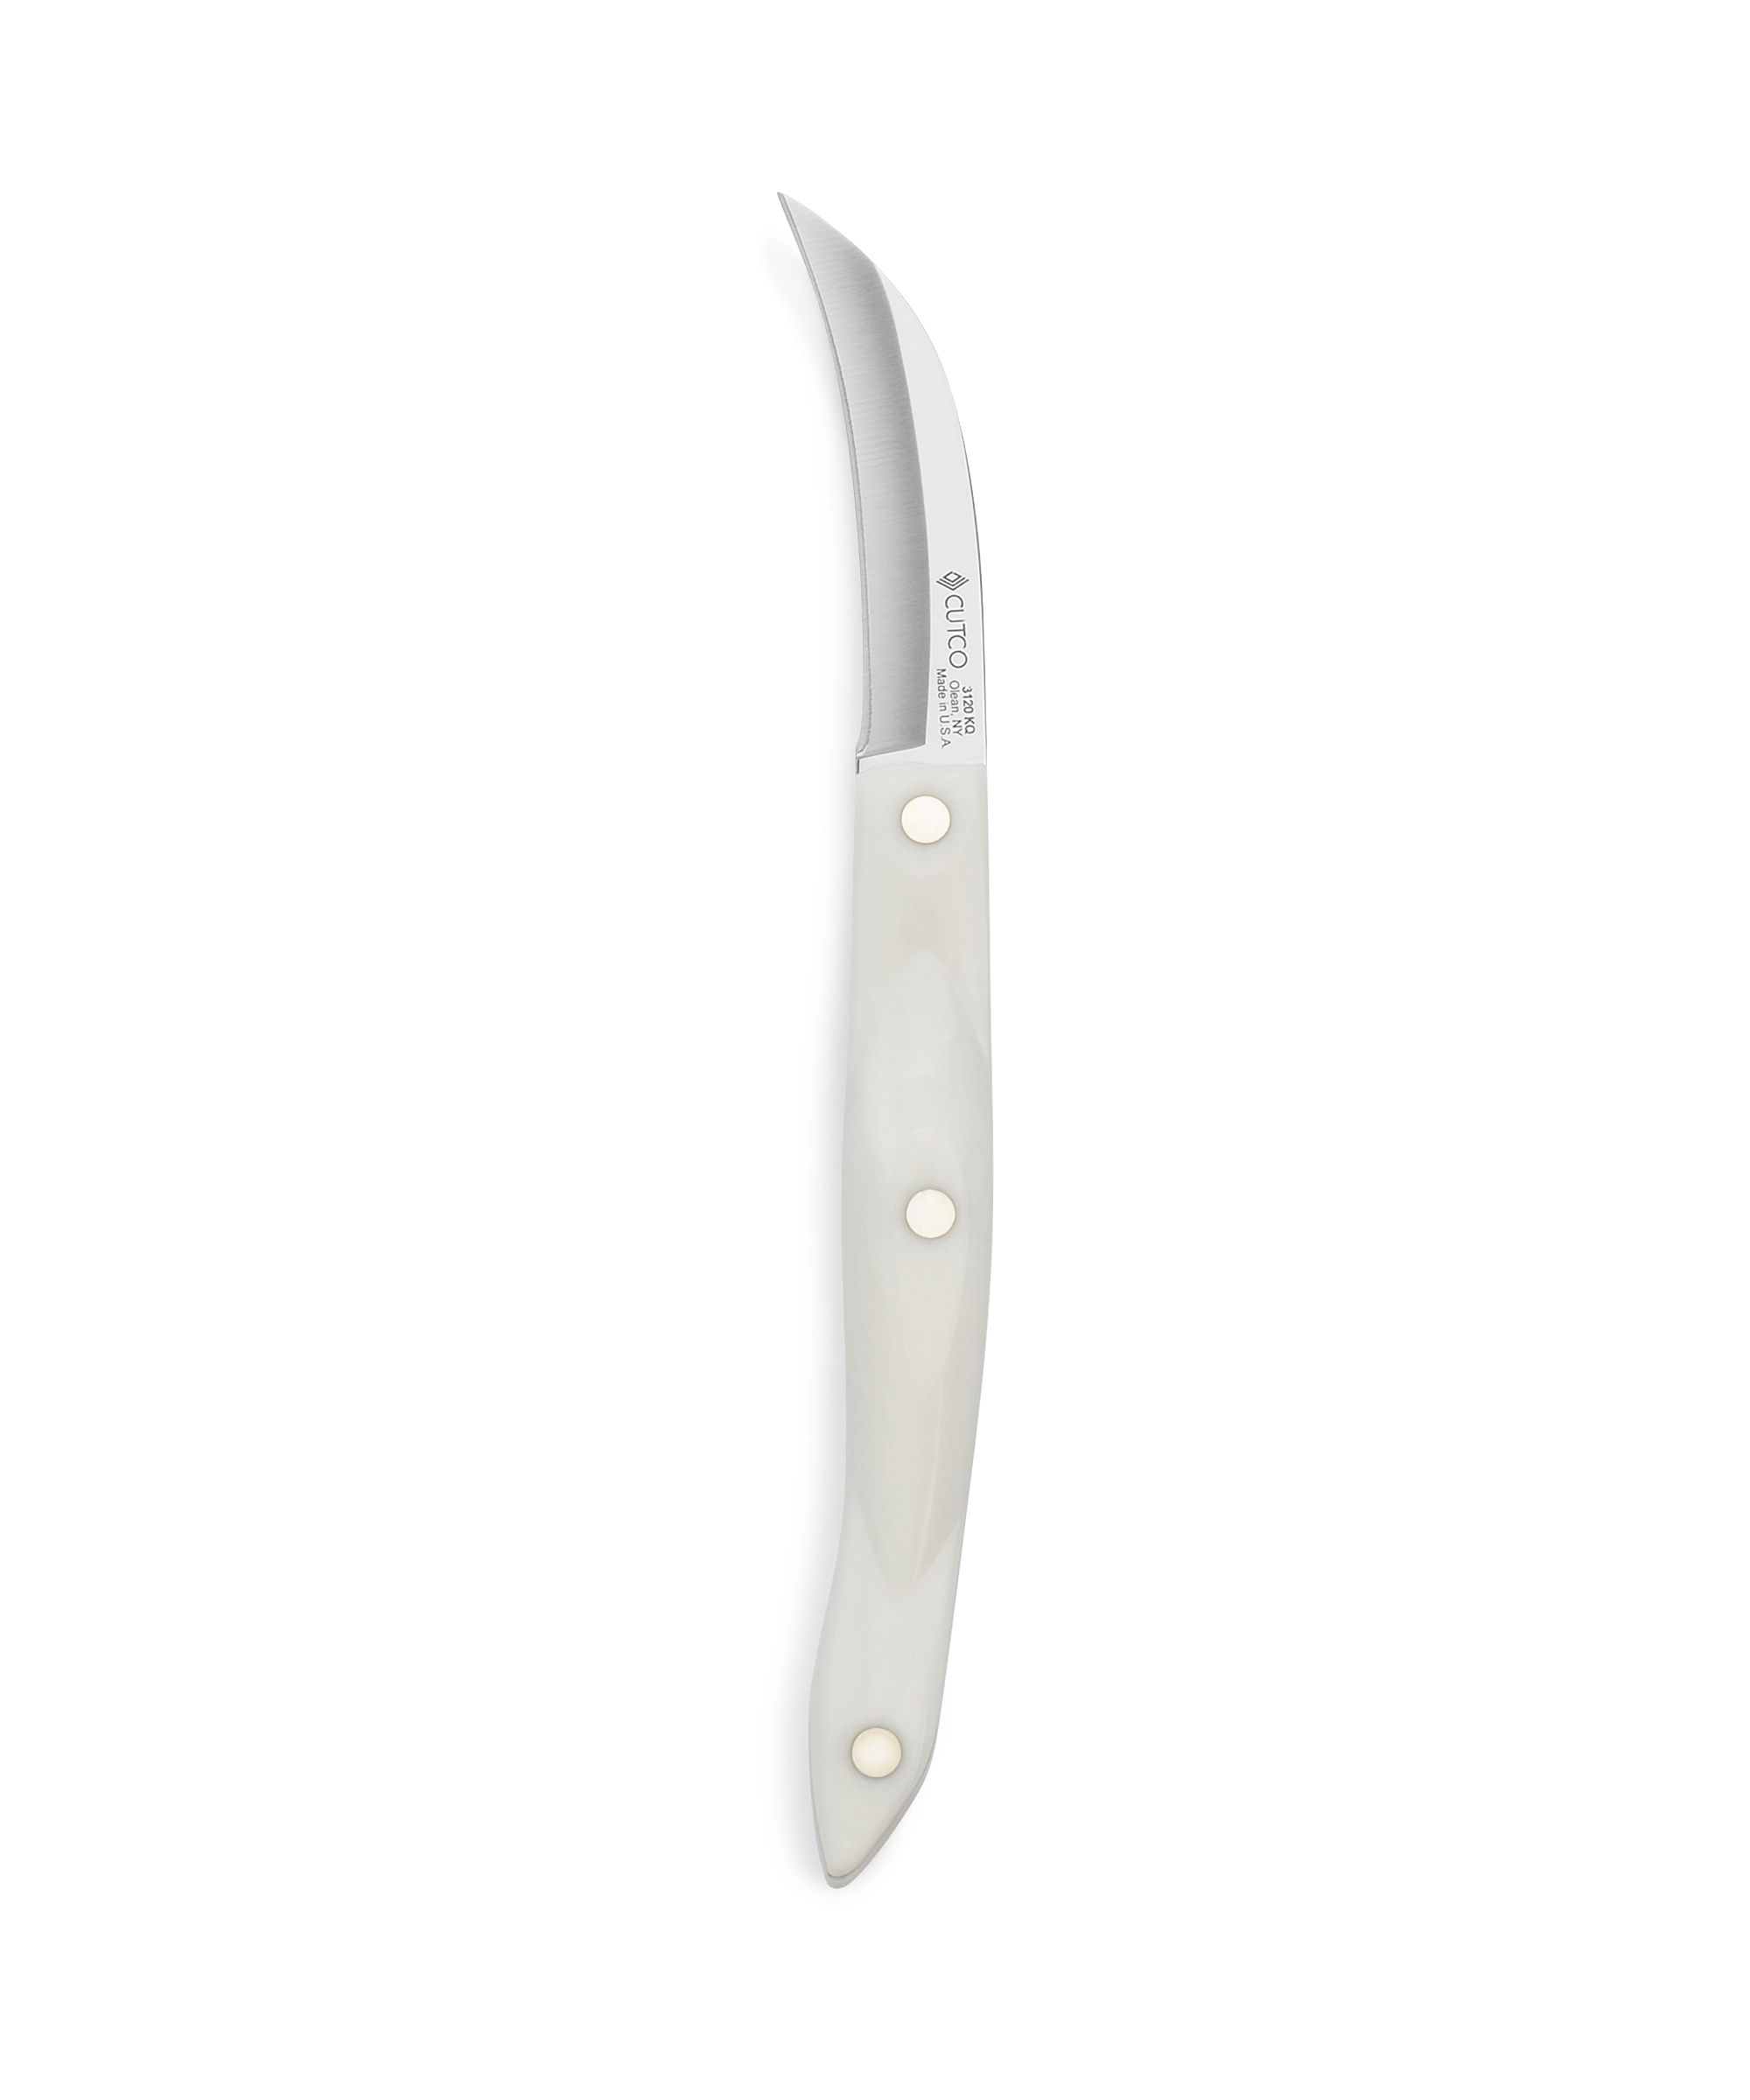 Pikal Knife & Sheath W/ or W/out Finger Notch dr Fruit Knife victorinox  Bird's Beak Paring / Fruit Knife Substitute 